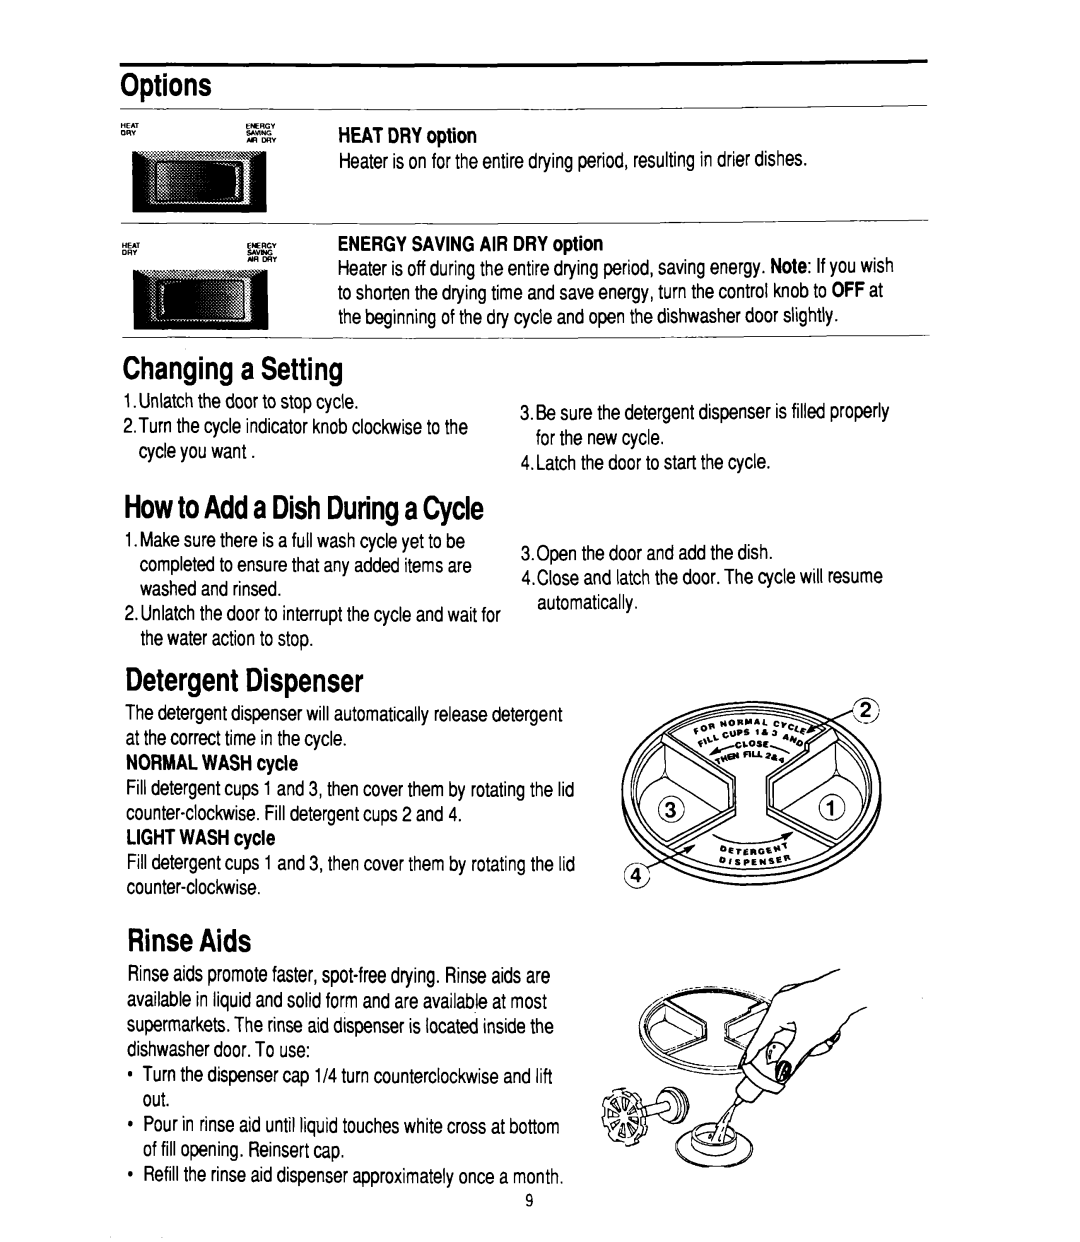 Whirlpool W10142816B manual Options, Changinga Setting, DetergentDispenser, RinseAids, HowtoAdda DishDuringaCycle 